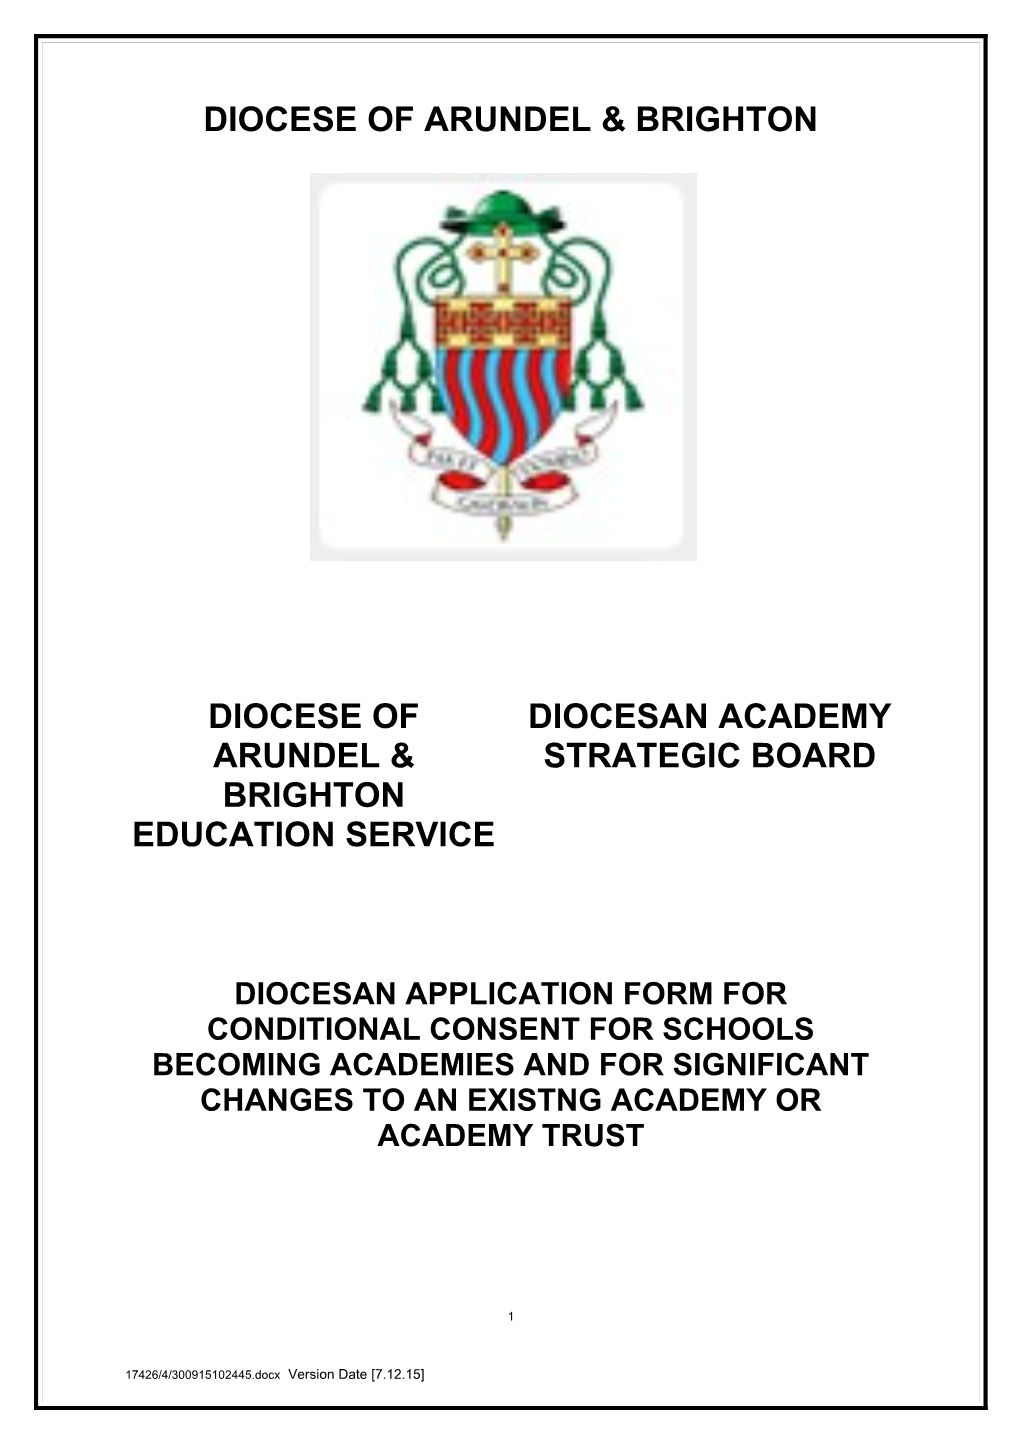 Diocesan Application Form